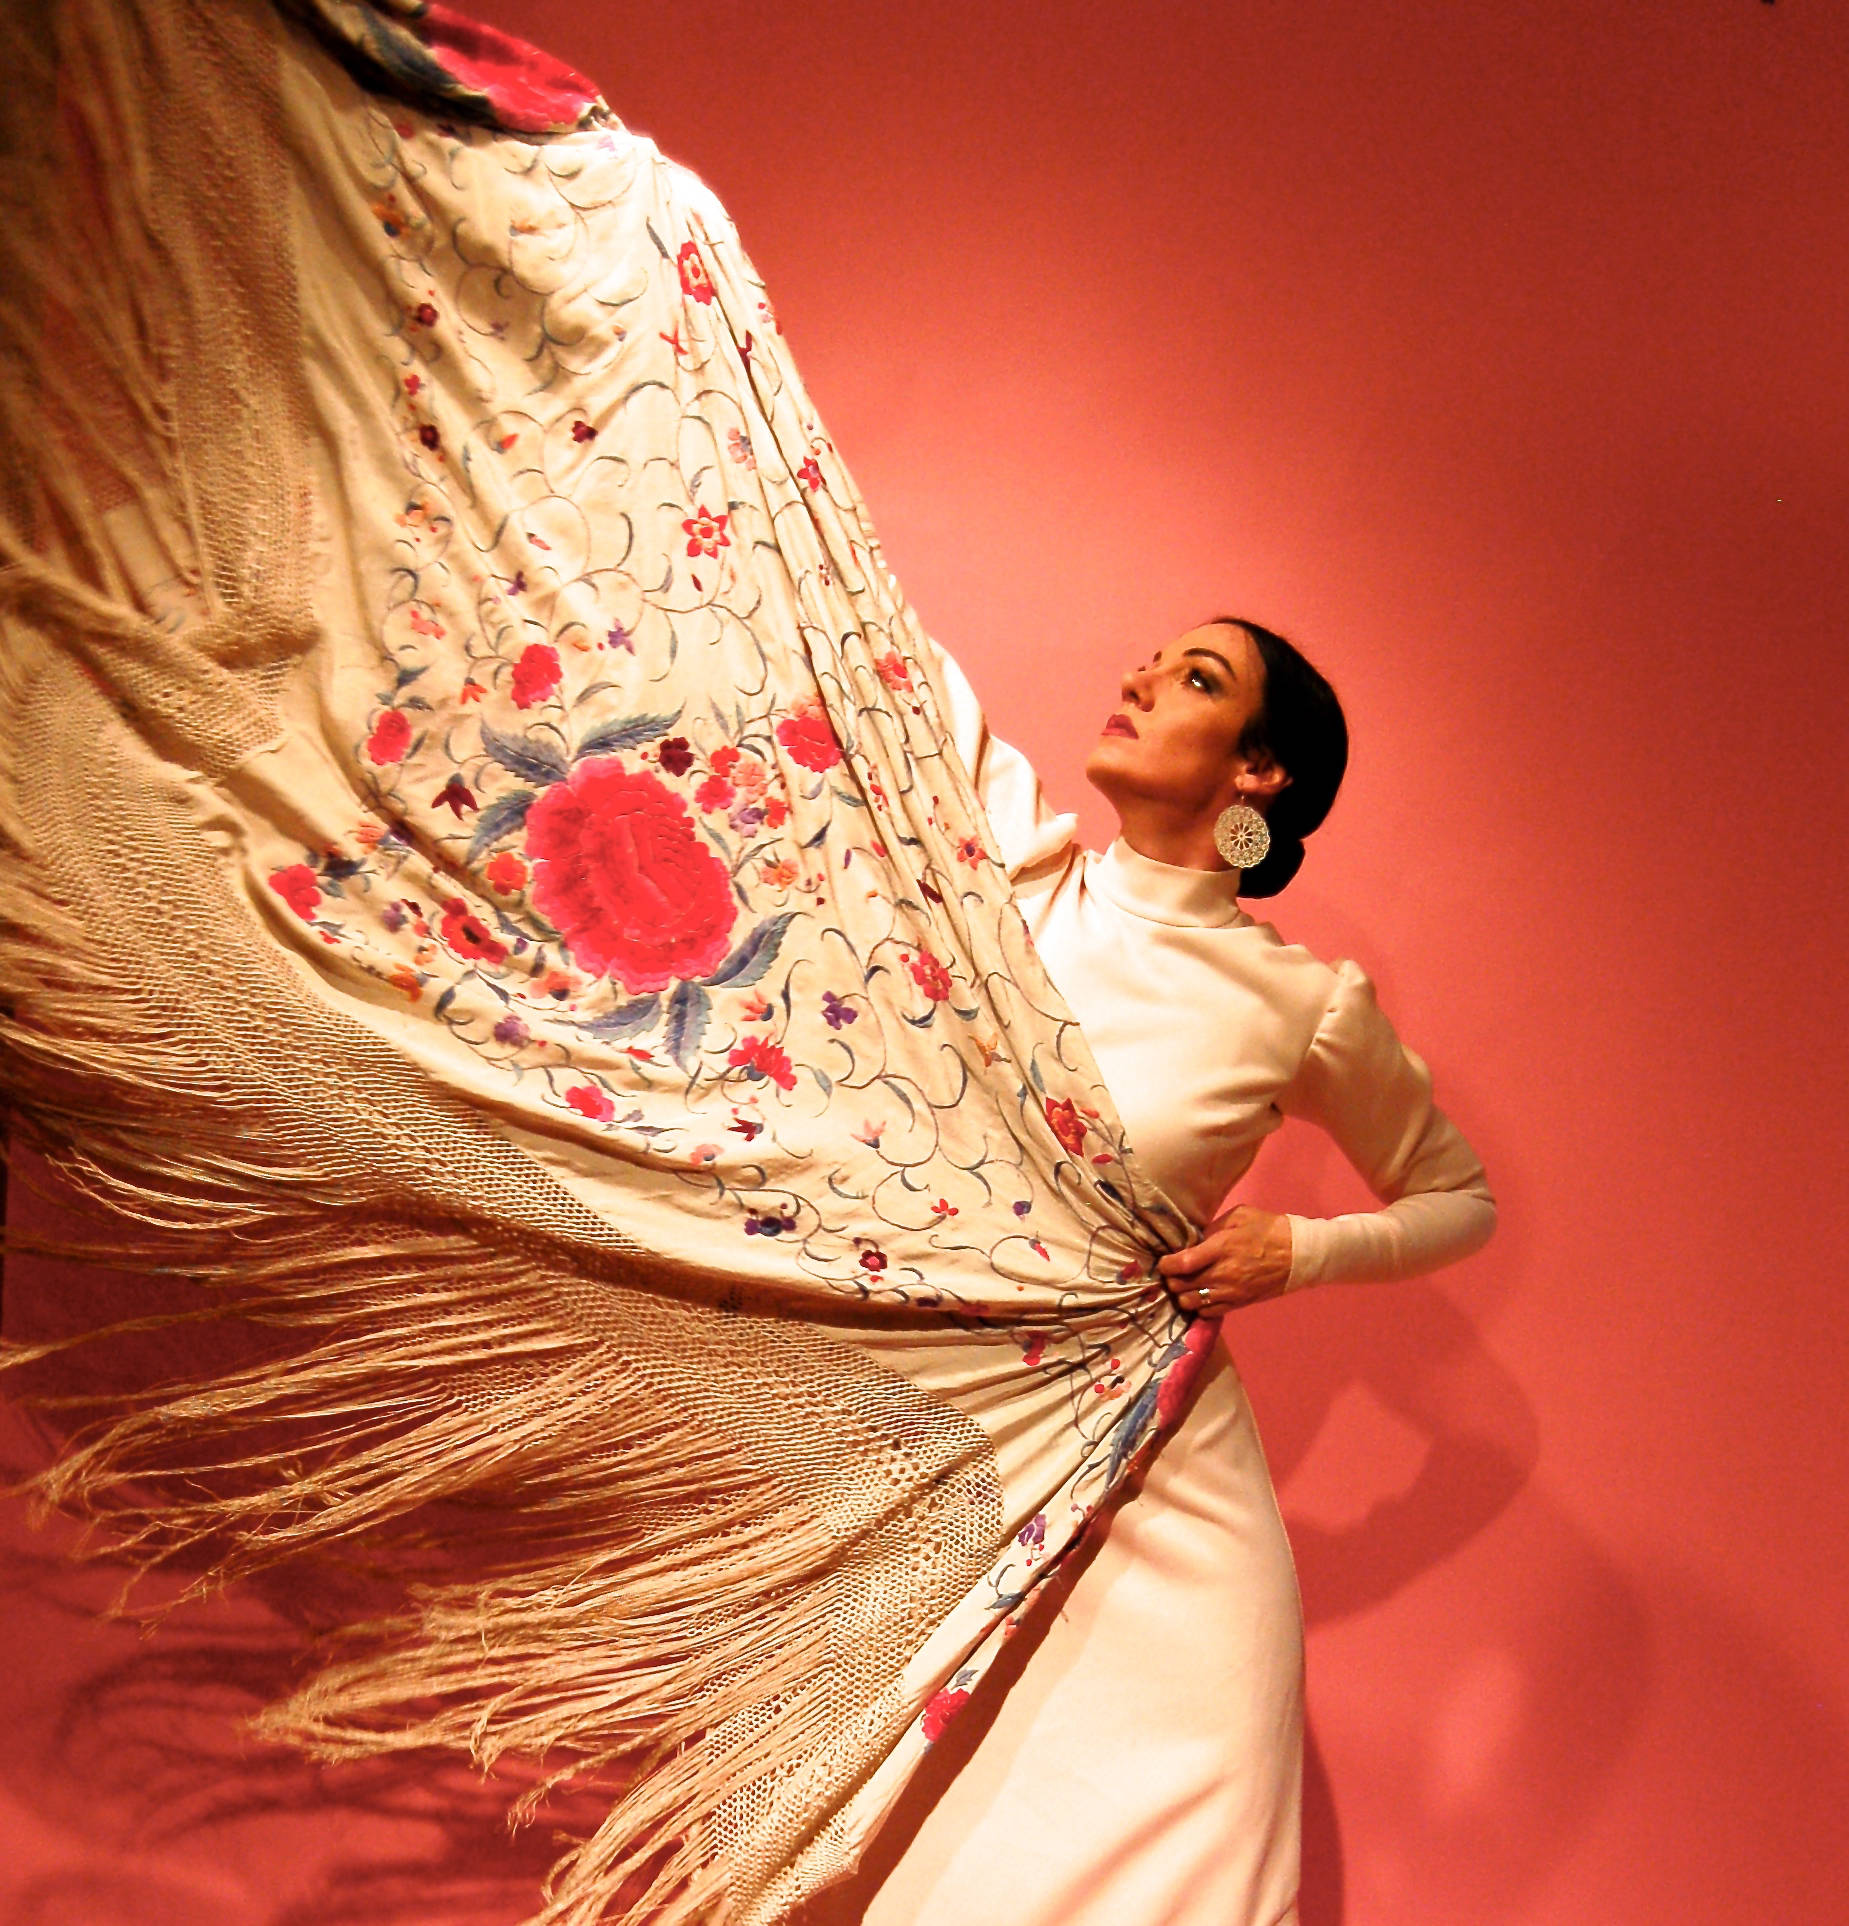 Savannah Fuentes will perform Flamenco in Poulsbo June 22. Courtesy Photos